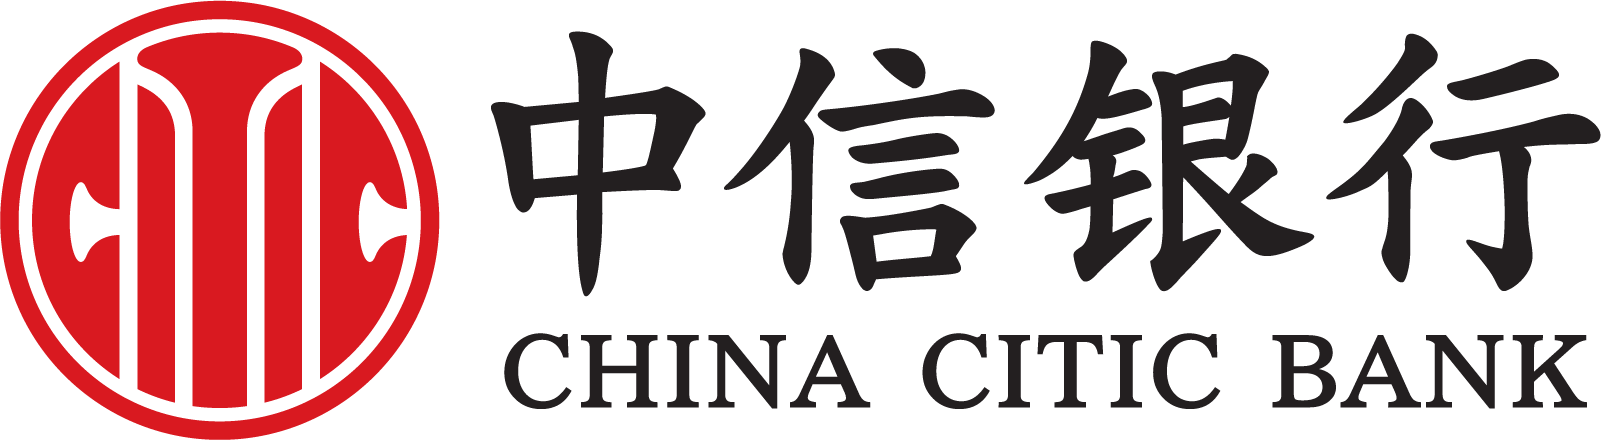 maiores bancos do mundo: bank of china